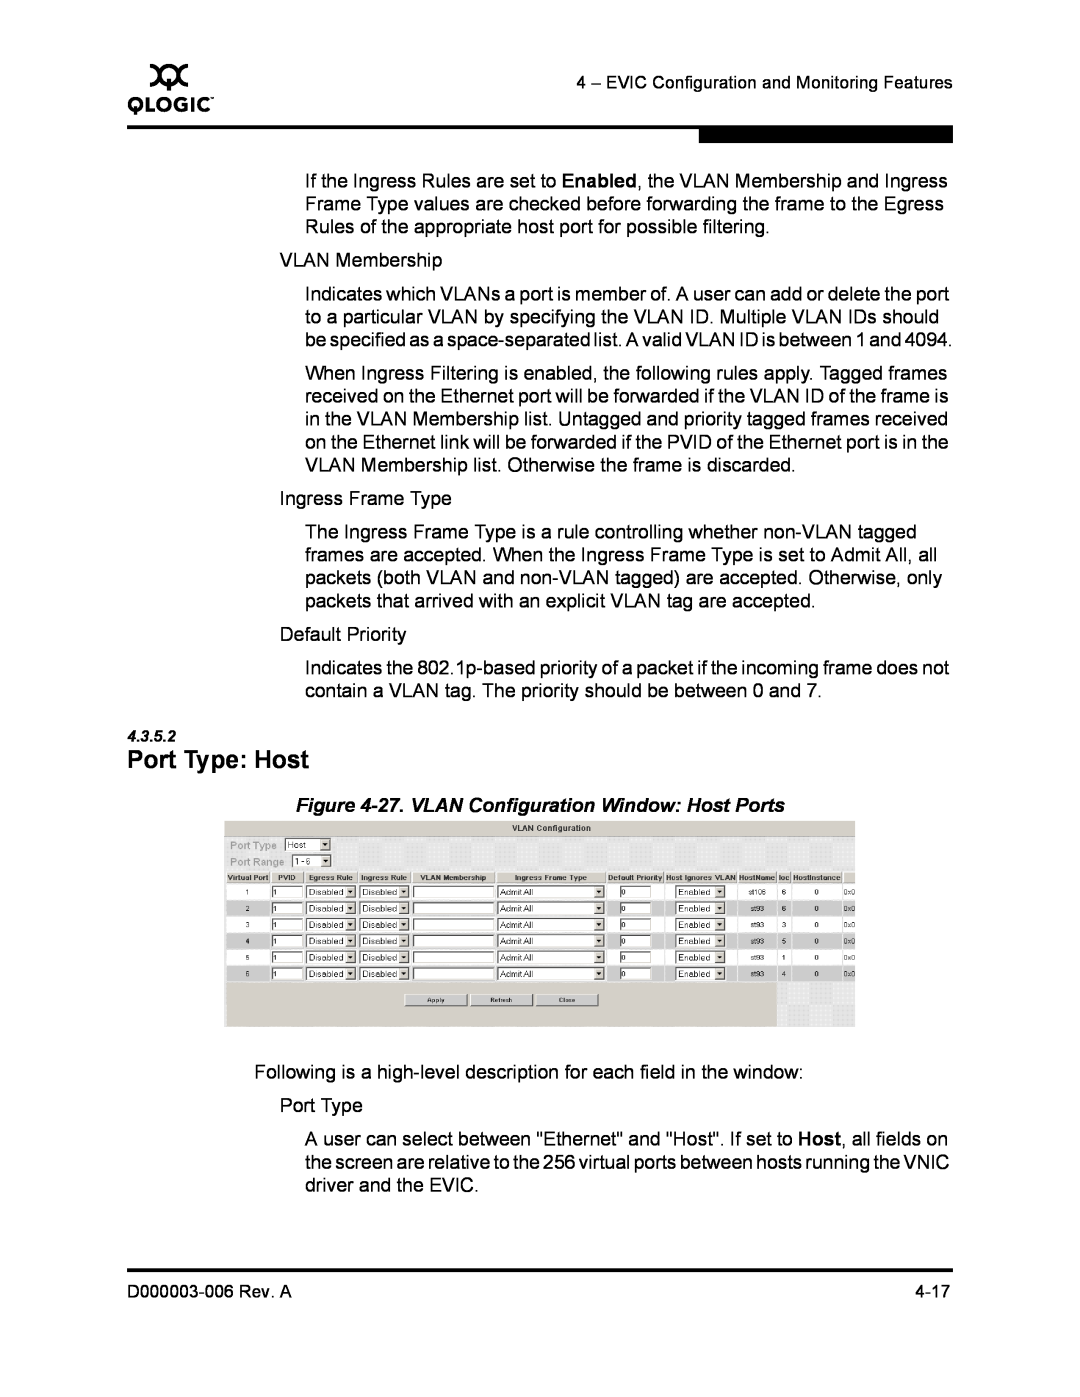 Q-Logic 9000 manual Port Type Host, 27. VLAN Configuration Window Host Ports 